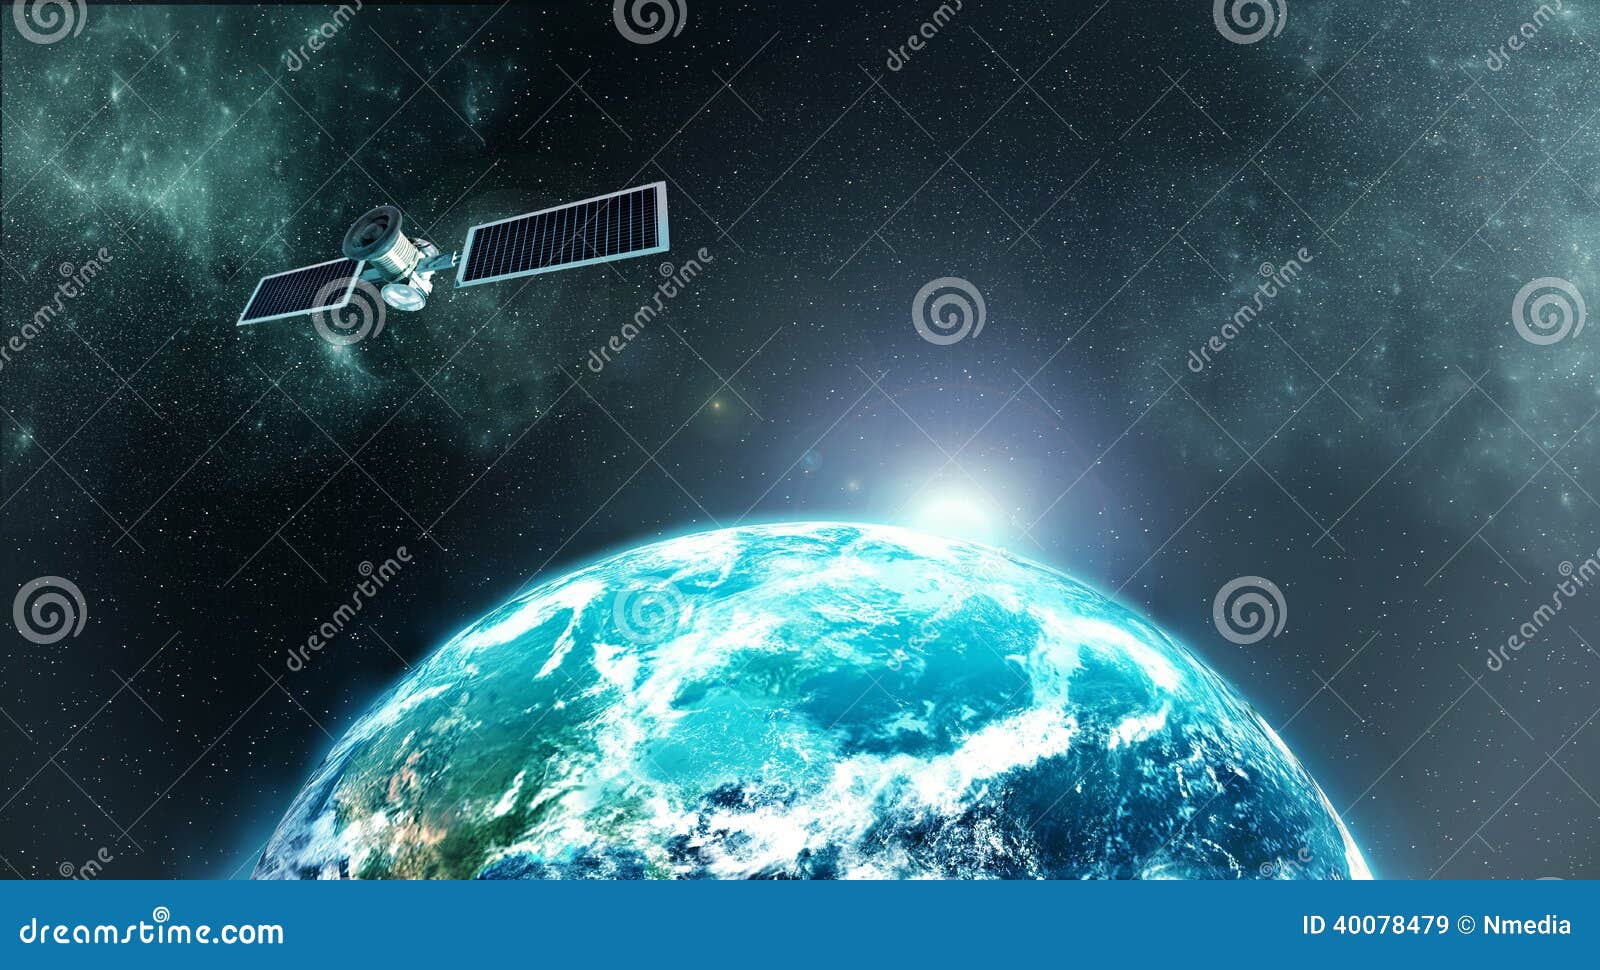 earth satellite